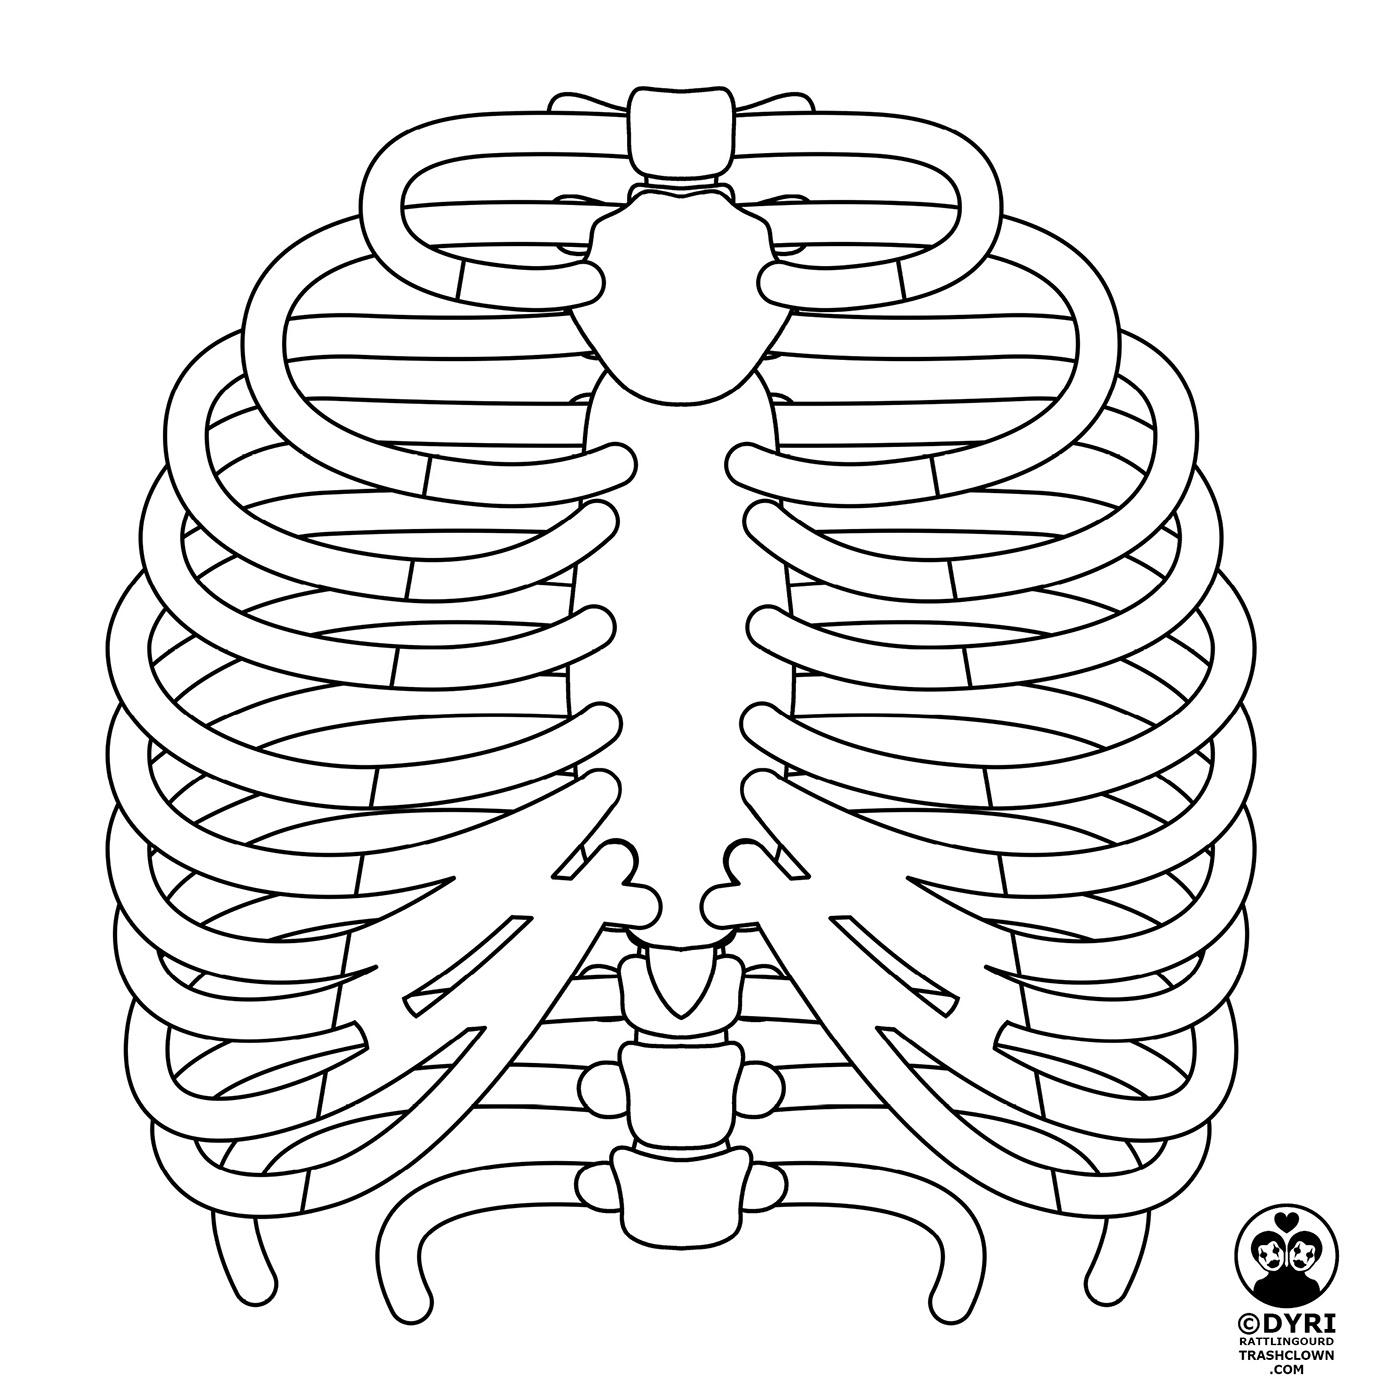 skeleton skeletons anatomy anatomical illustration sketch pen and ink tarot